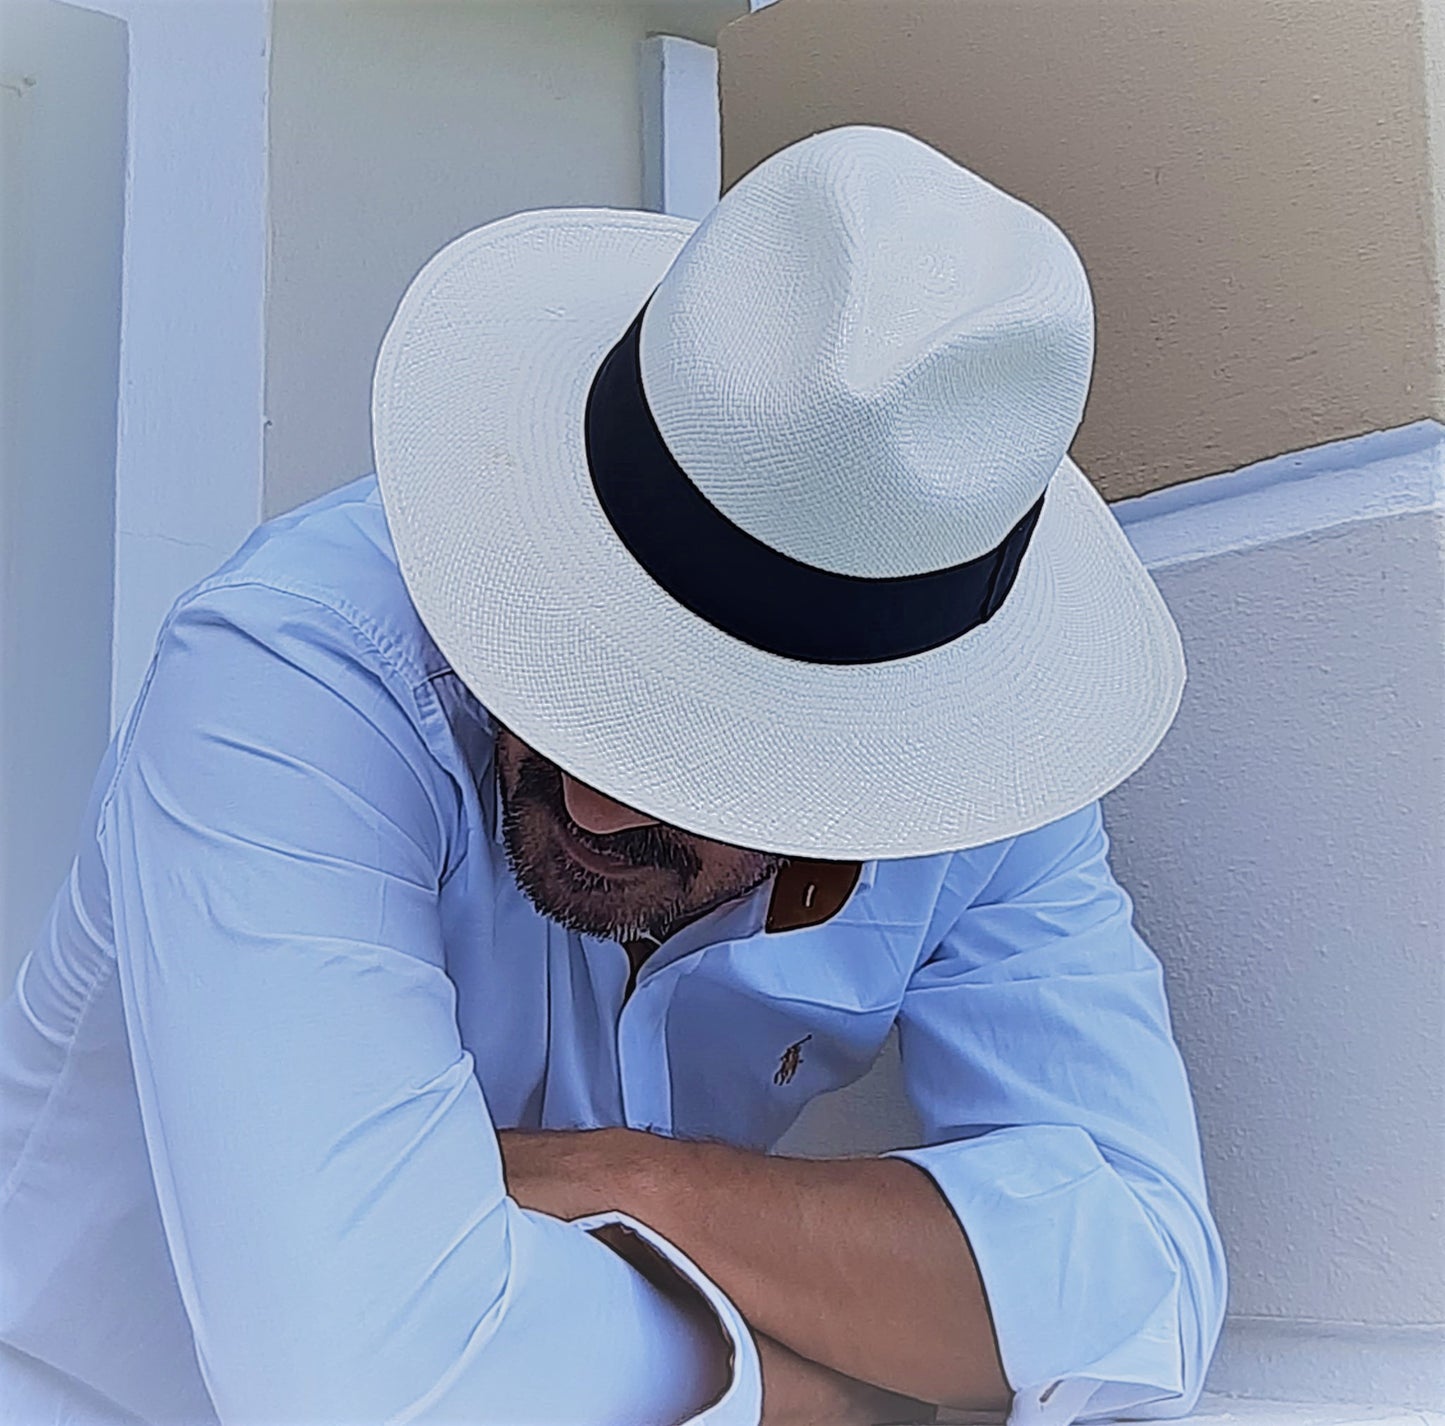 White Panama Hat